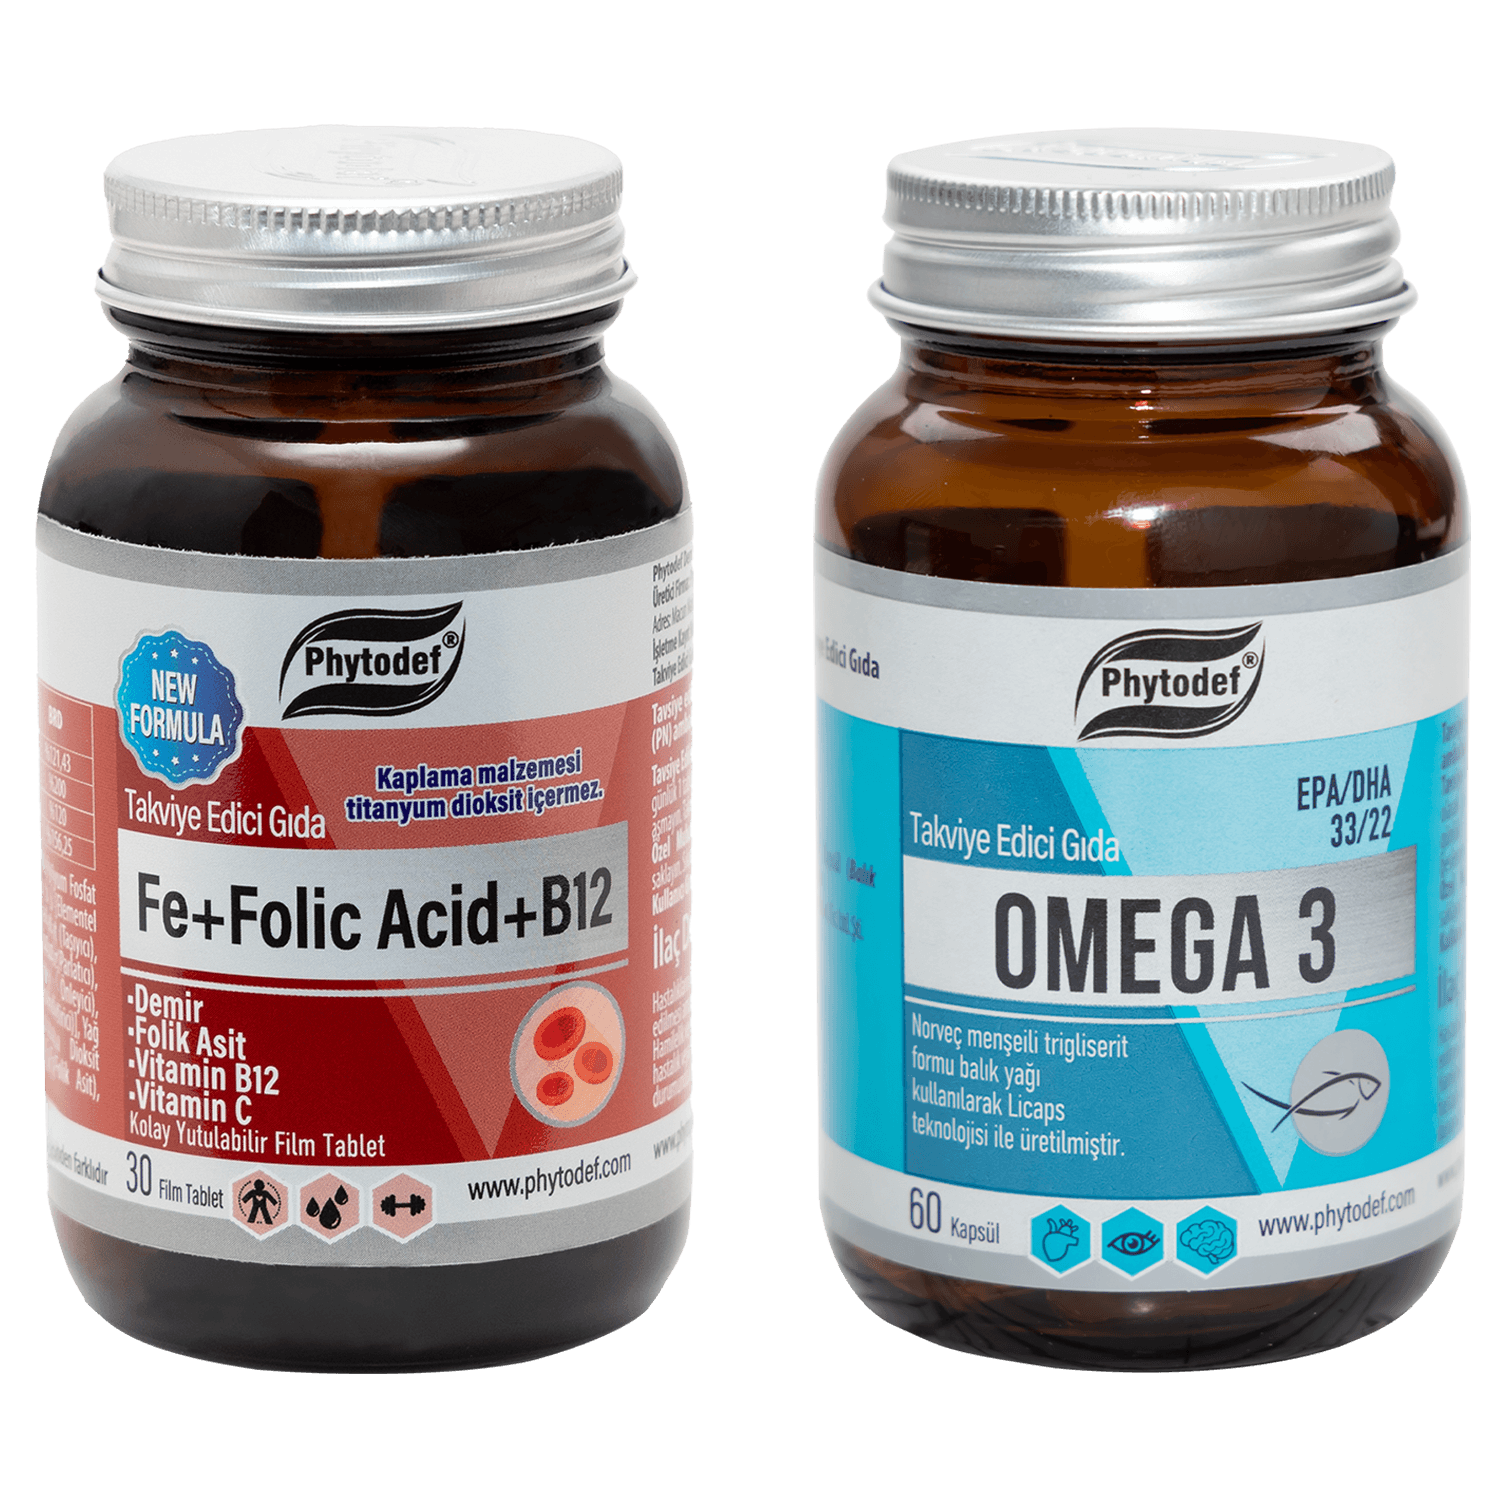 Demir + Folik Asit + Vitamin B12 + Vitamin C - 30 Tablet & Omega 3 Licaps, 500mg 60 Kapsül 330/220 Norveç Menşeli Balık Yağı, Kapsül (Balık Jelatini)